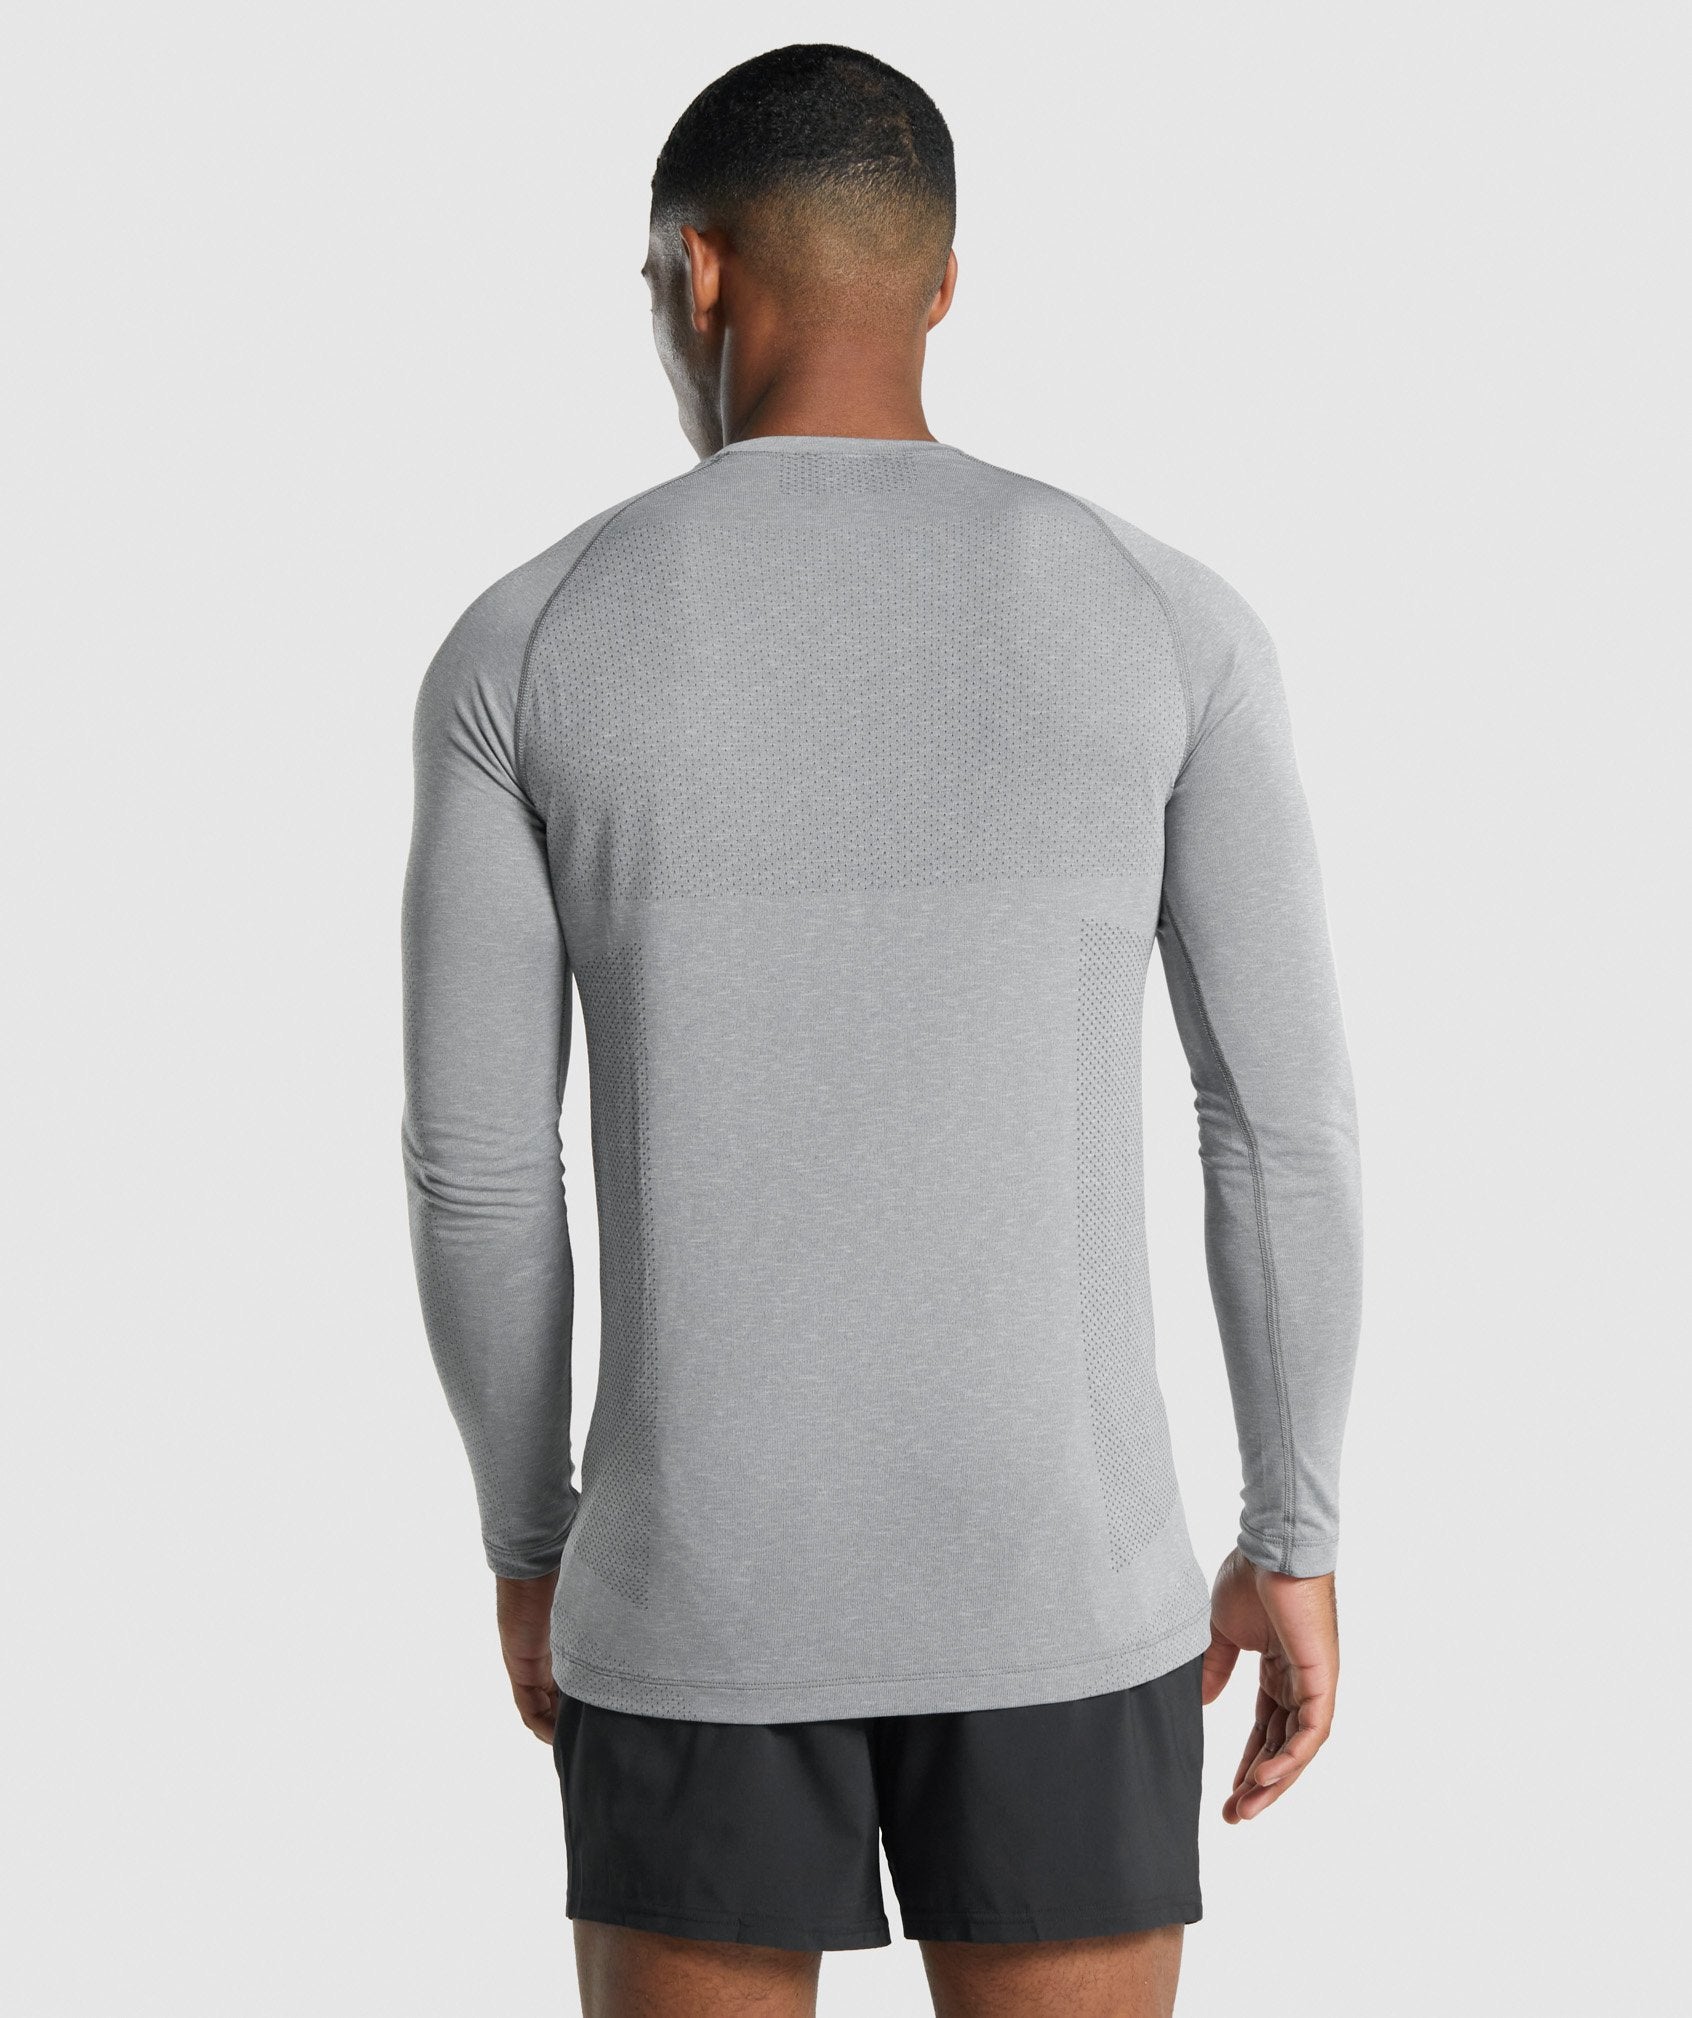 Vital Light Seamless Long Sleeve T-Shirt